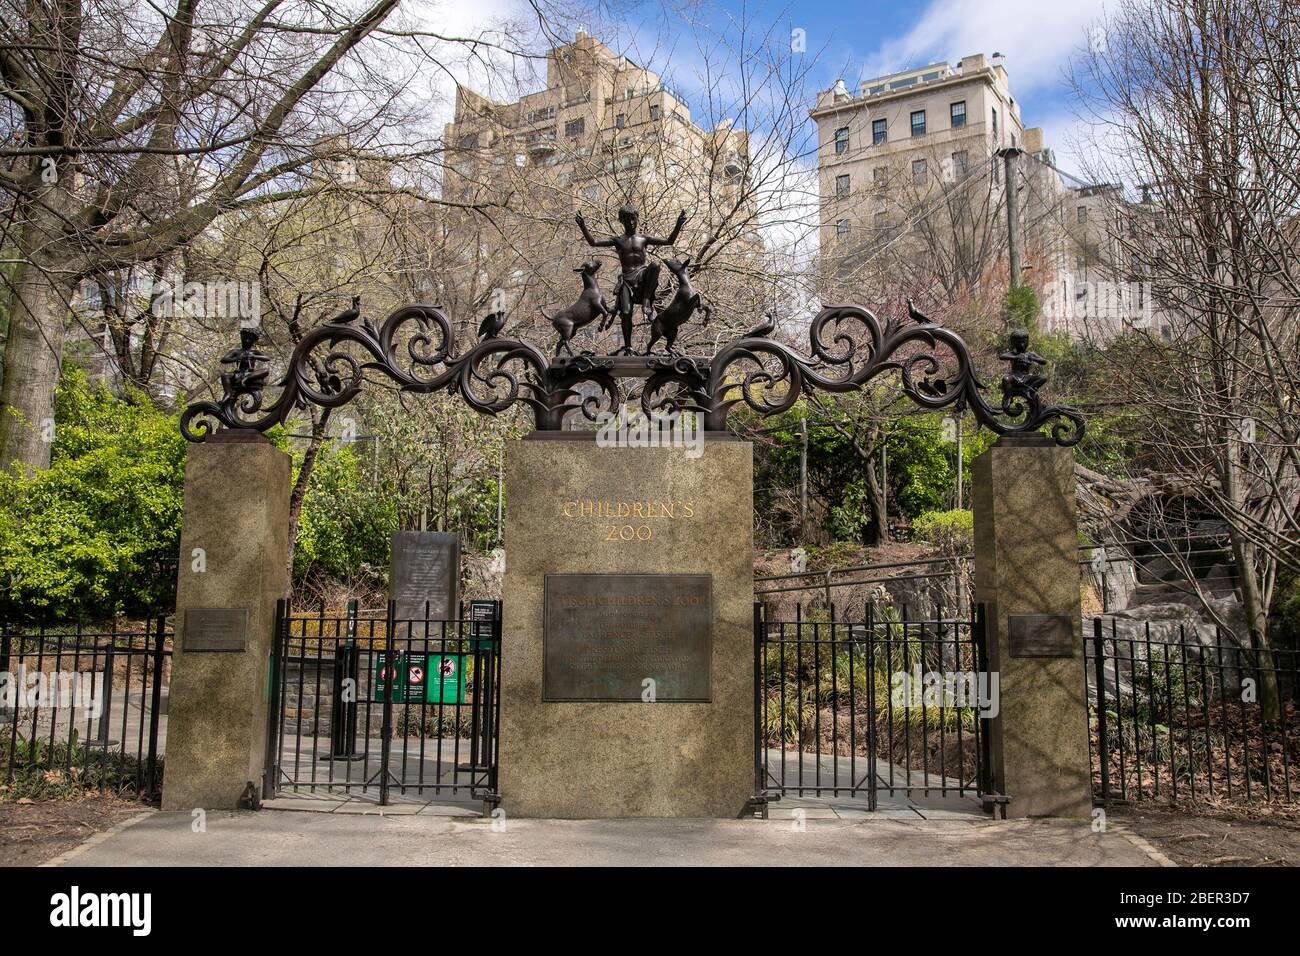 The Tisch Children's Zoo entrance gate, Central Park, New York City. Stock Photo